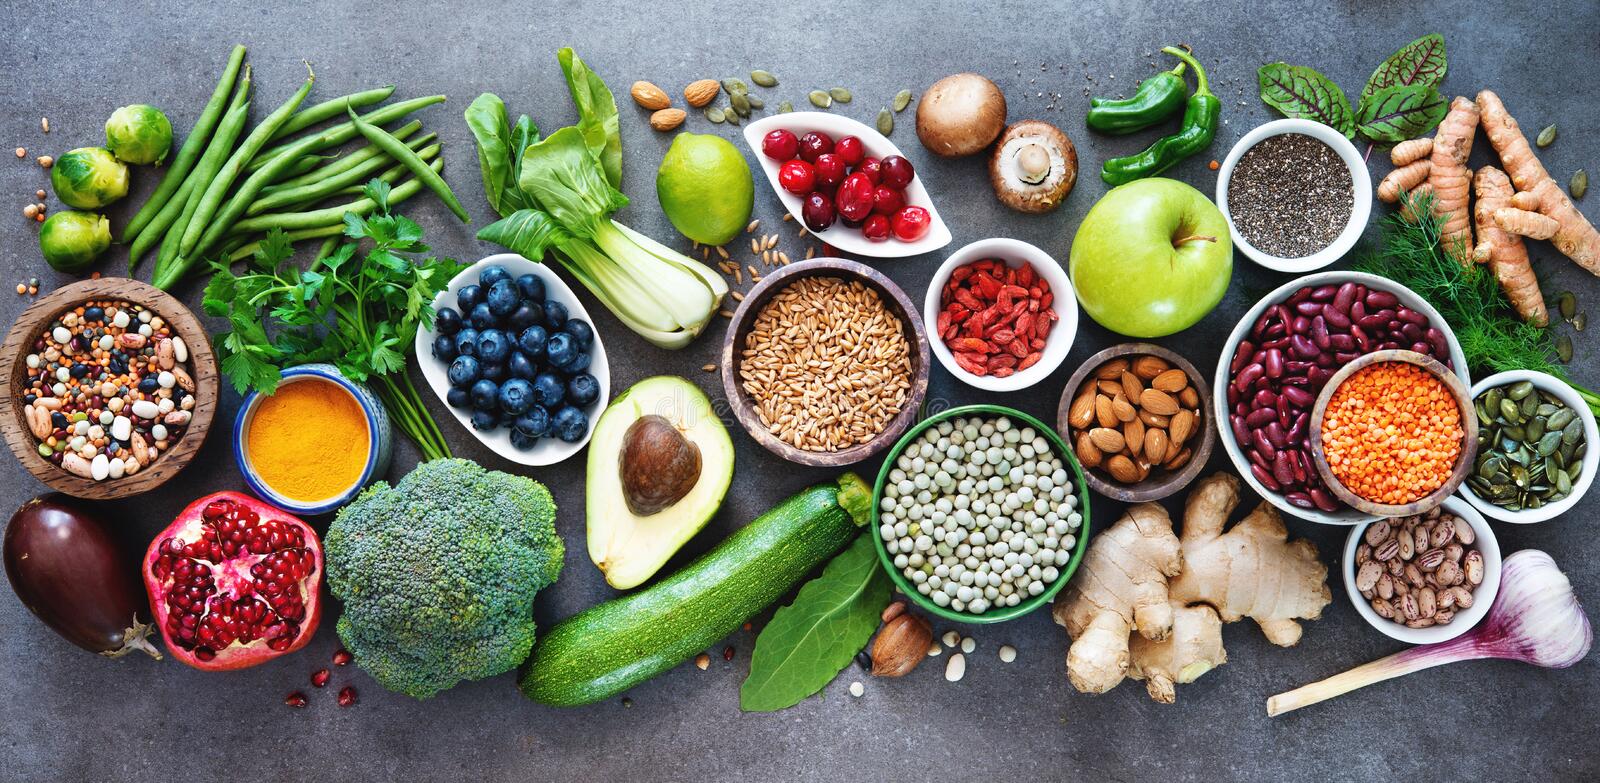 healthy-food-selection-healthy-food-selection-fruits-vegetables-seeds-superfood-cereals-gray-background-121936825